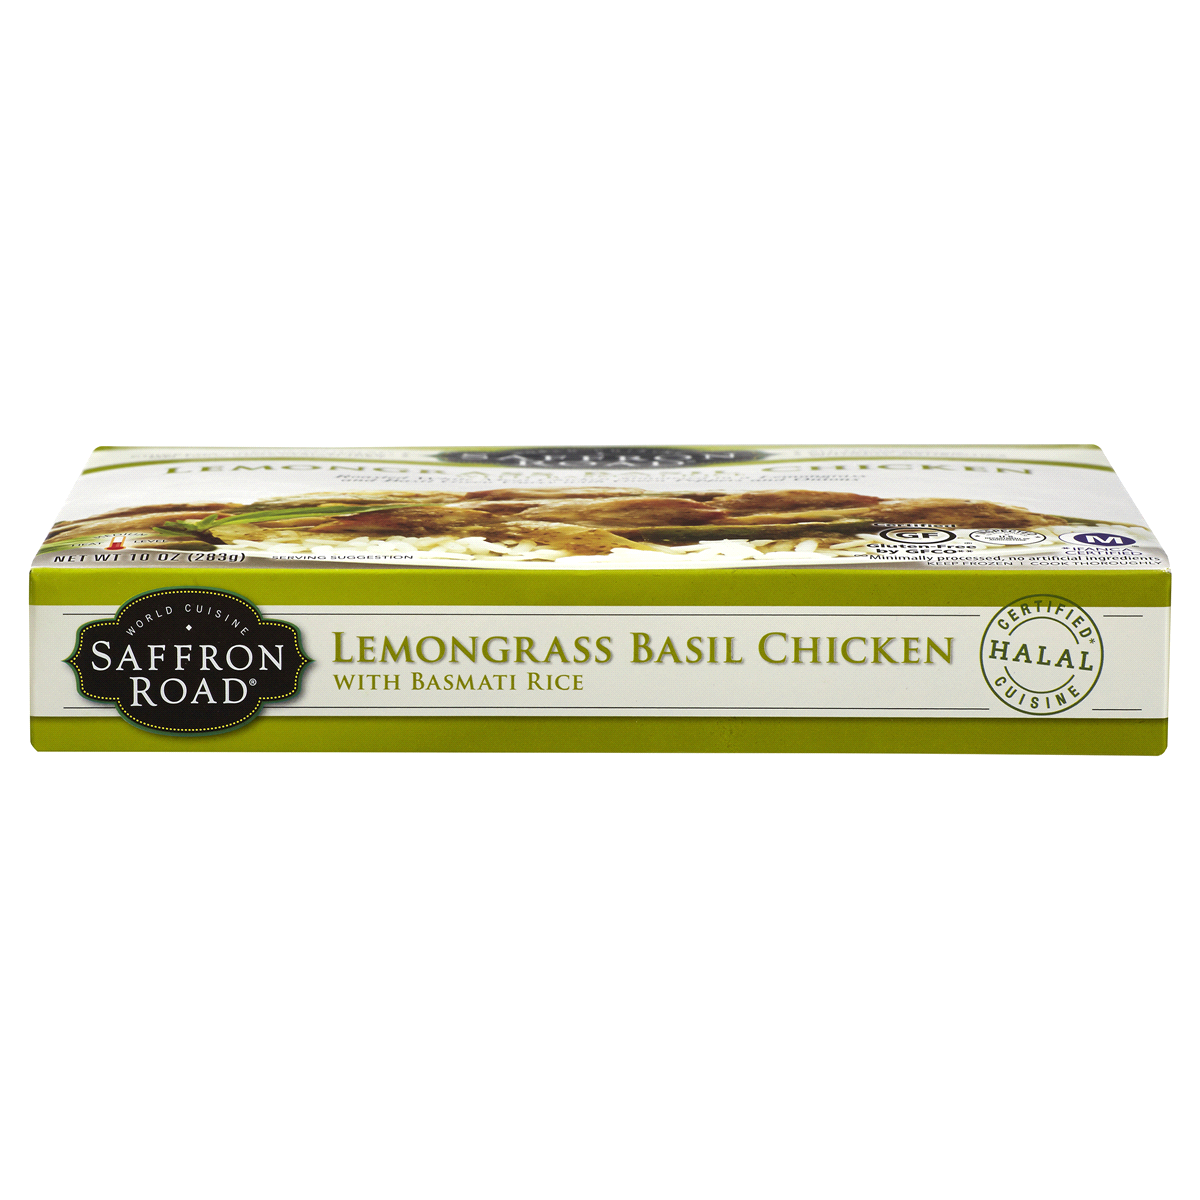 slide 2 of 14, Saffron Road With Basmati Rice Lemongrass Basil Chicken 10 oz, 10 oz